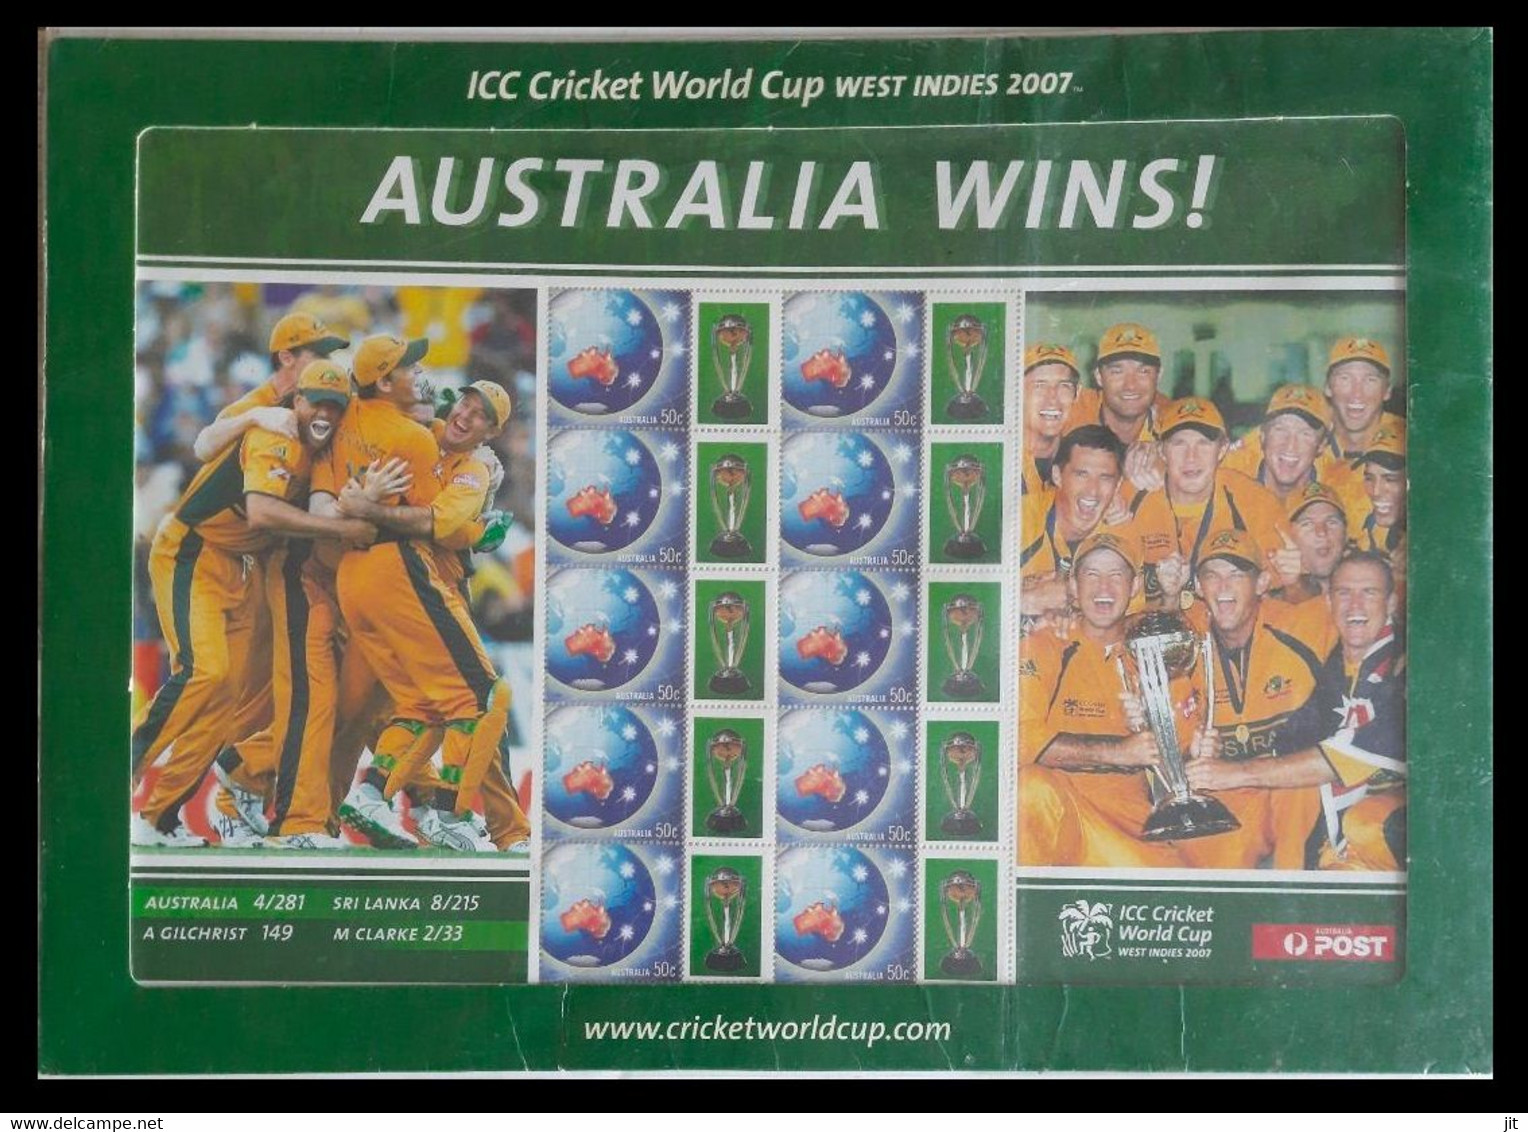 166. AUSTRALIA 2007 STAMP SHEET AUSTRALIA WINS !! ICC CRICKET WORLD CUP .MNH - Volledige & Onvolledige Vellen